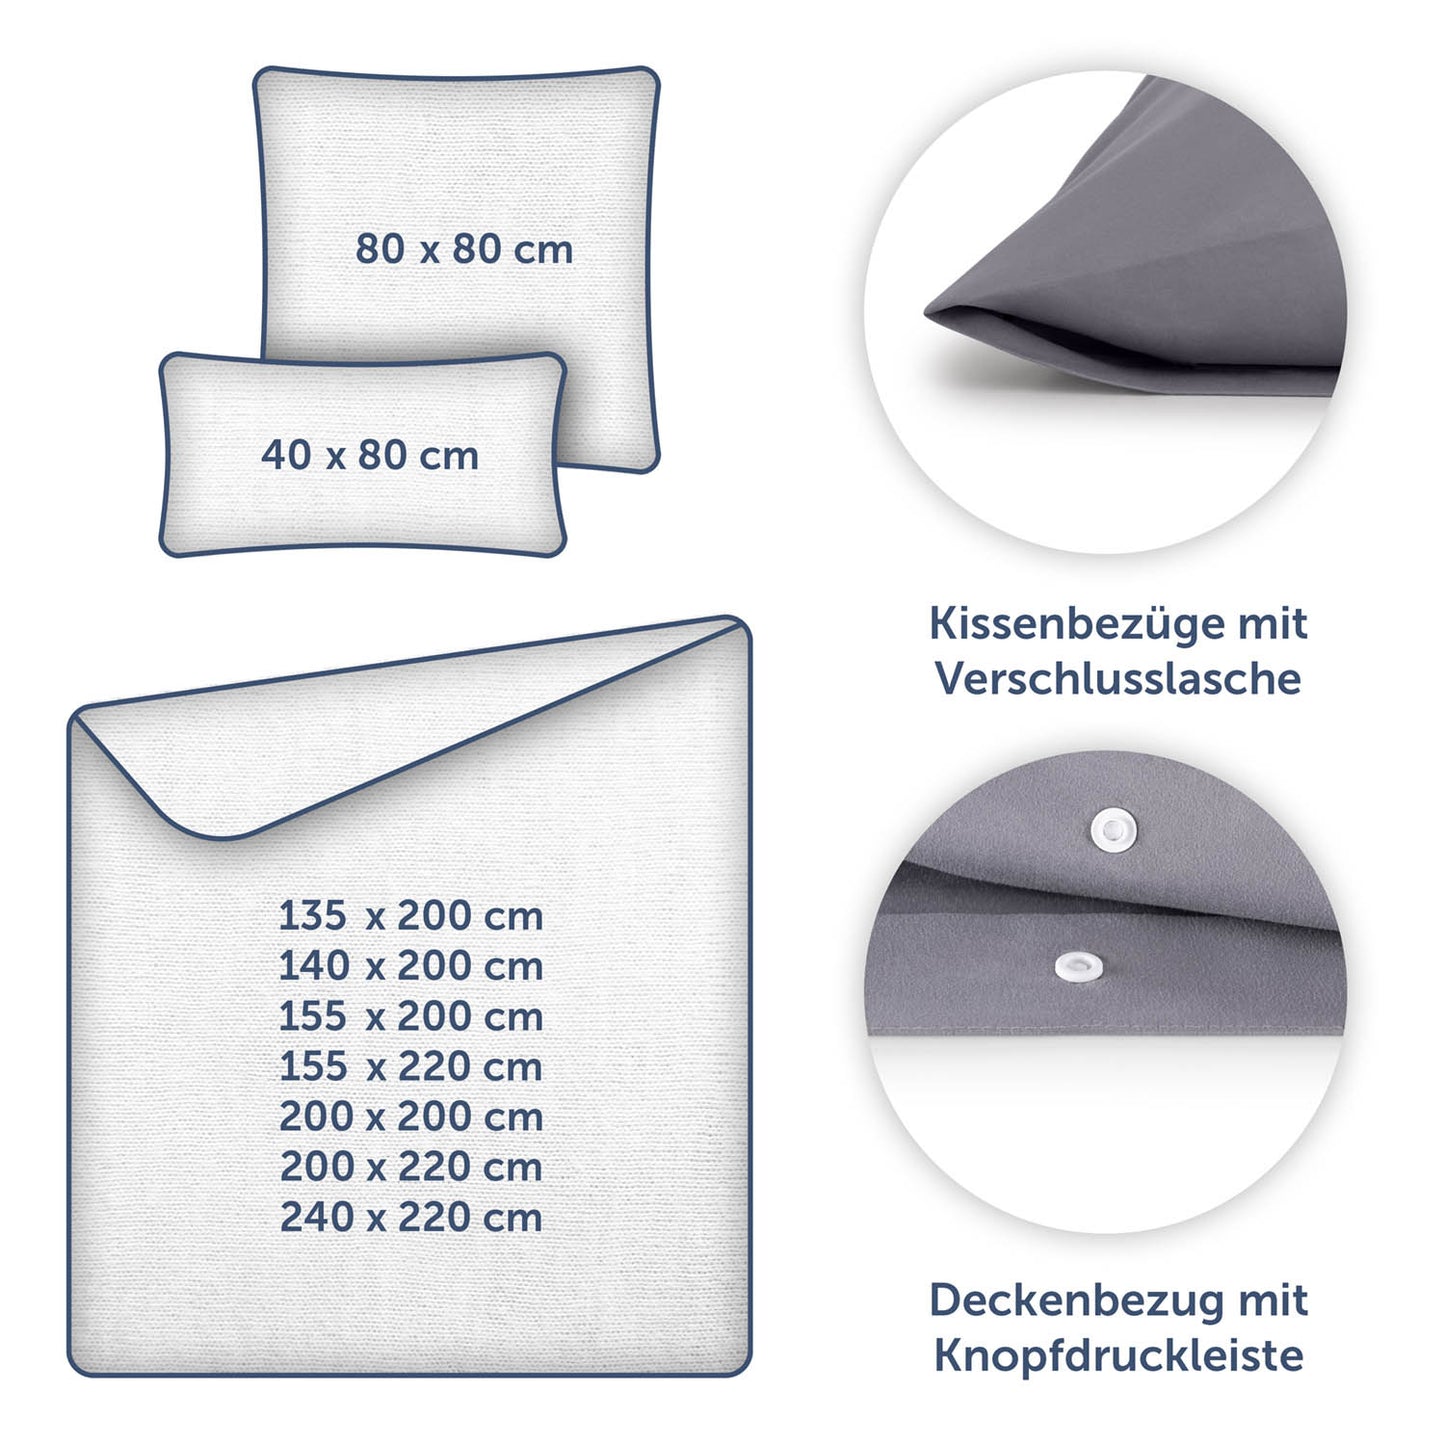 Bettbezug Set aus Mikrofaser - Superweich, Oekotex Zertifiziert, 135x200cm